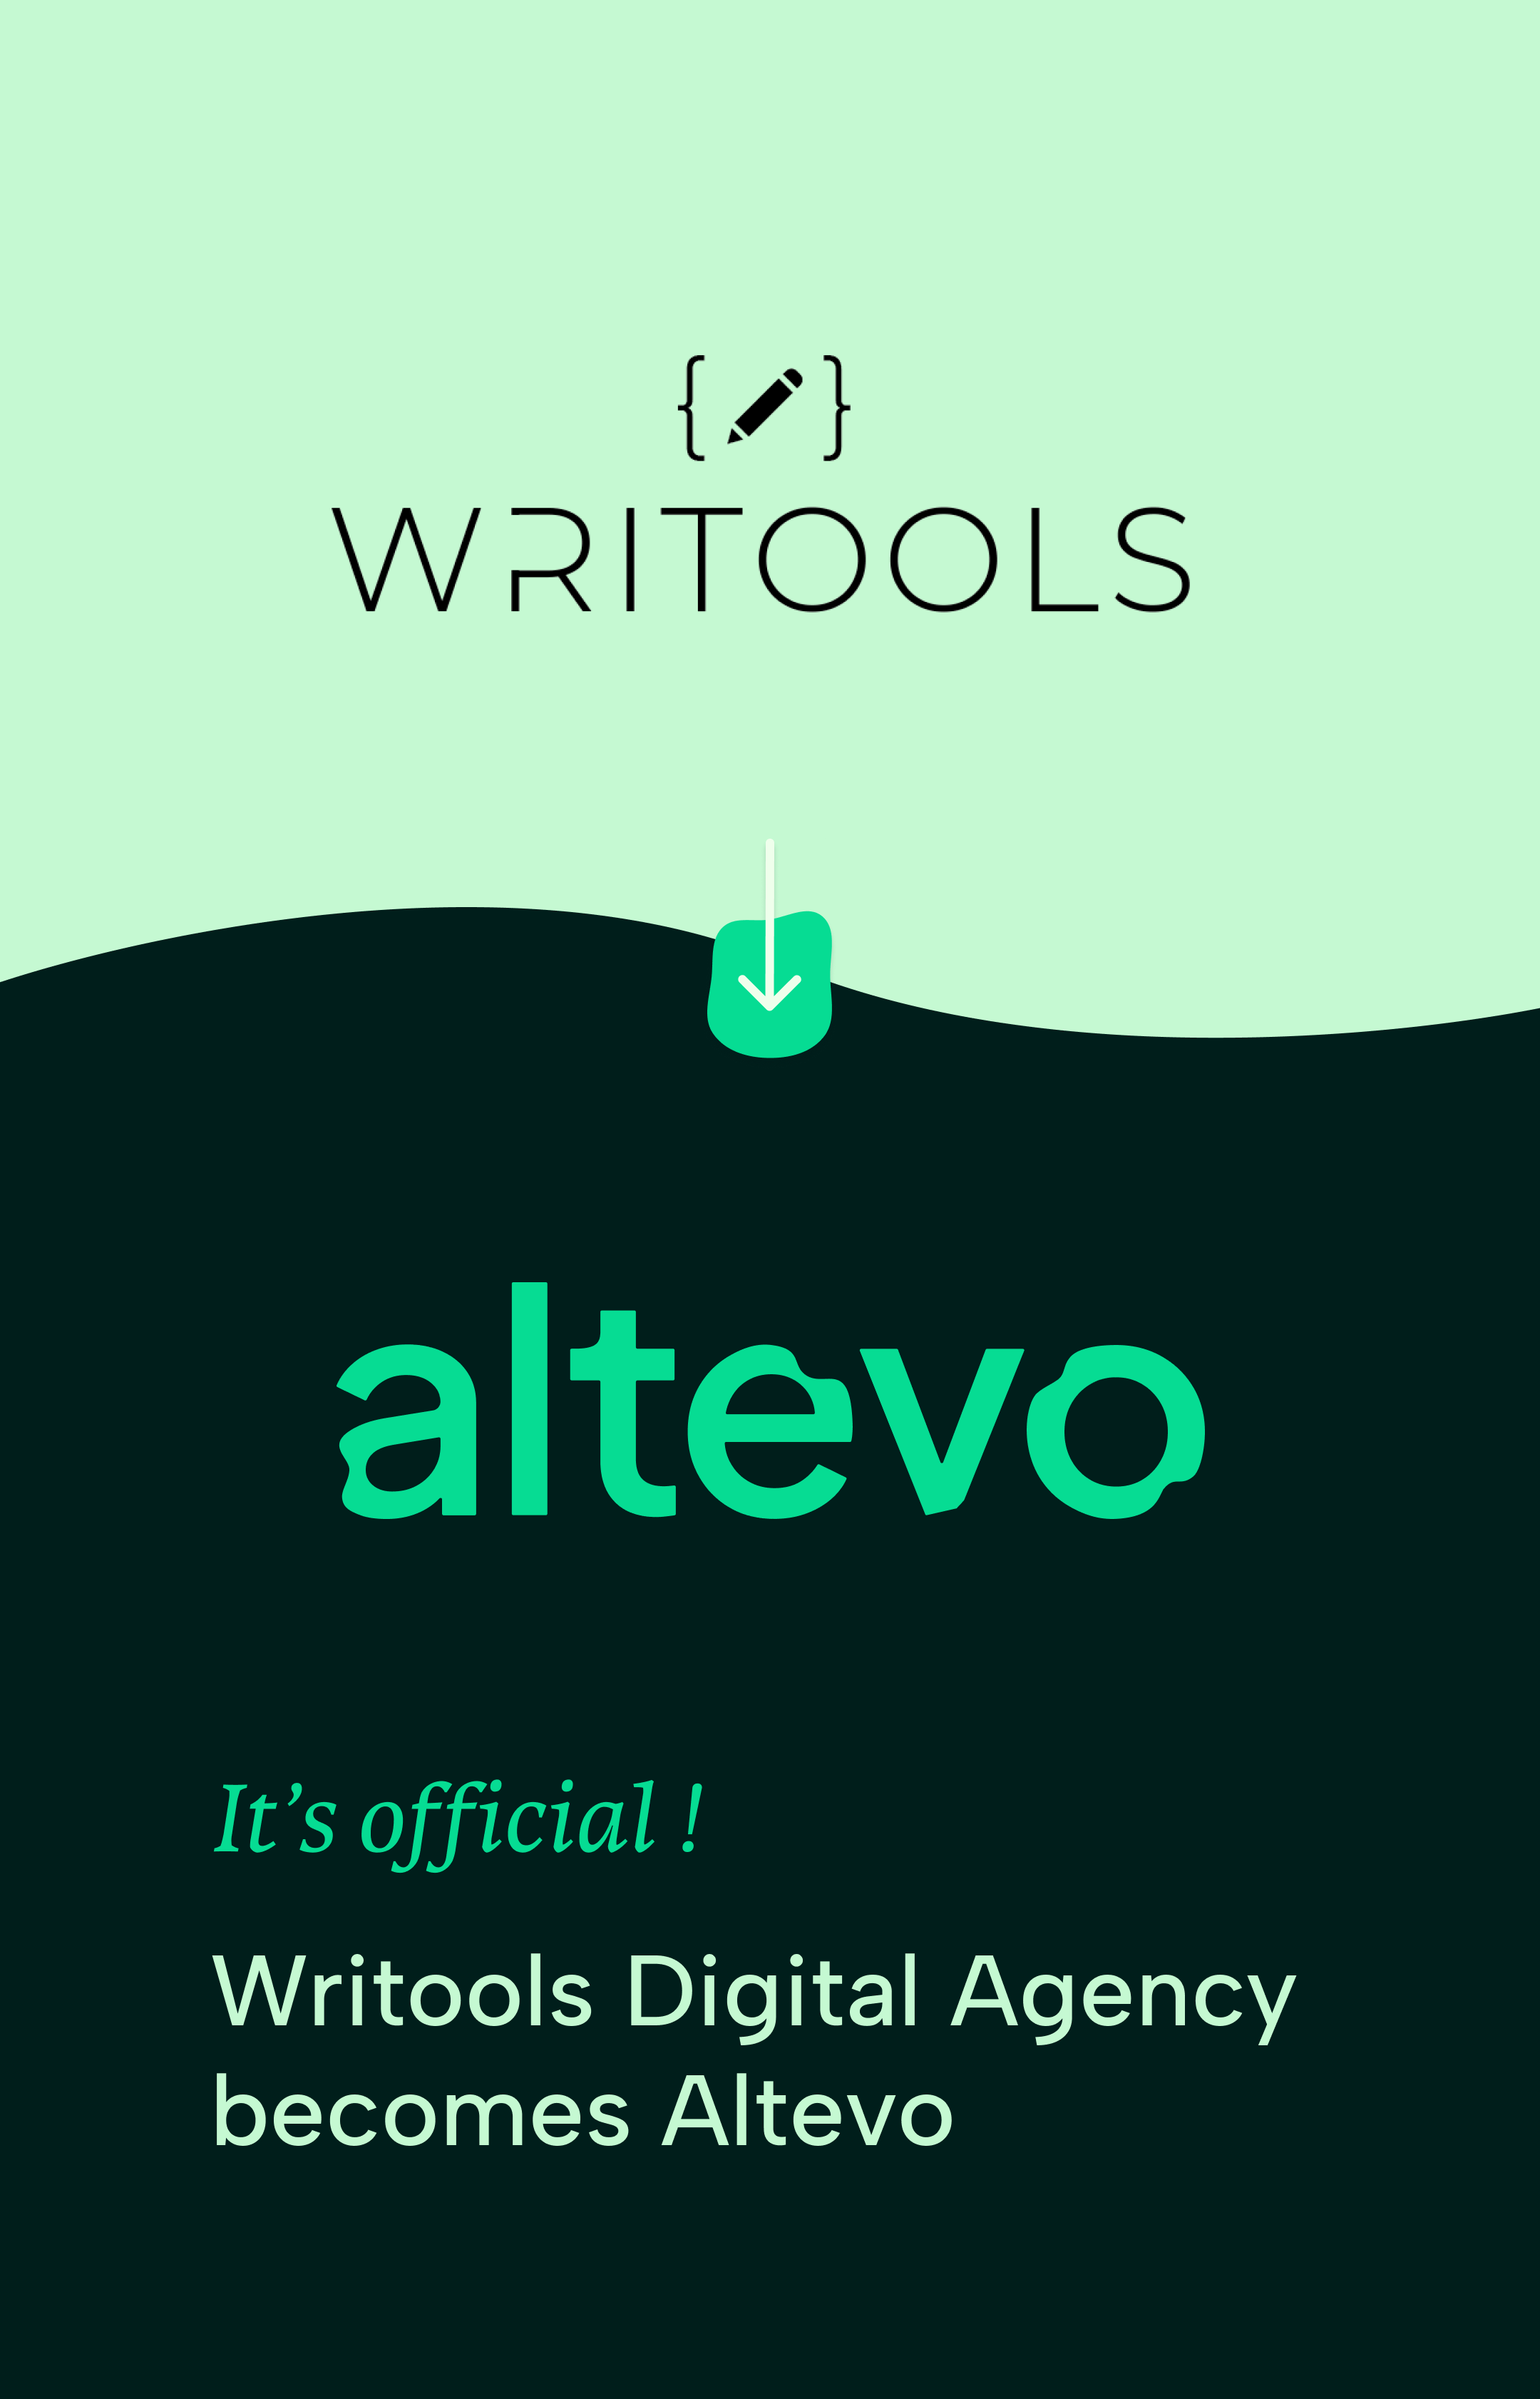 Writools Digital Agency becomes Altevo